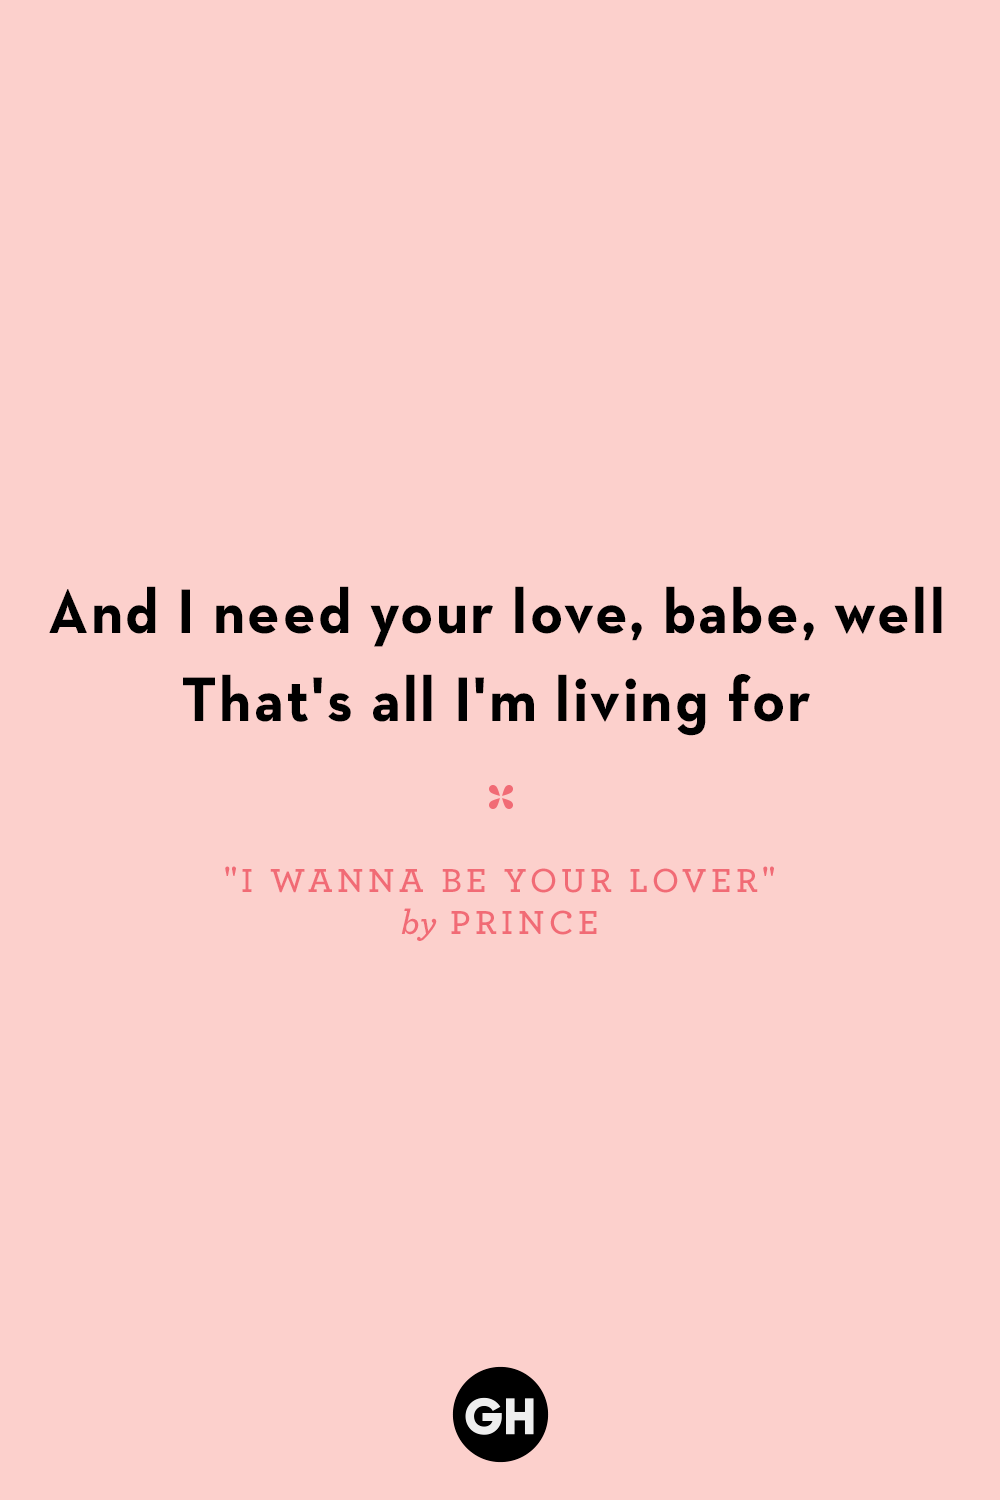 The most beautiful love song lyrics